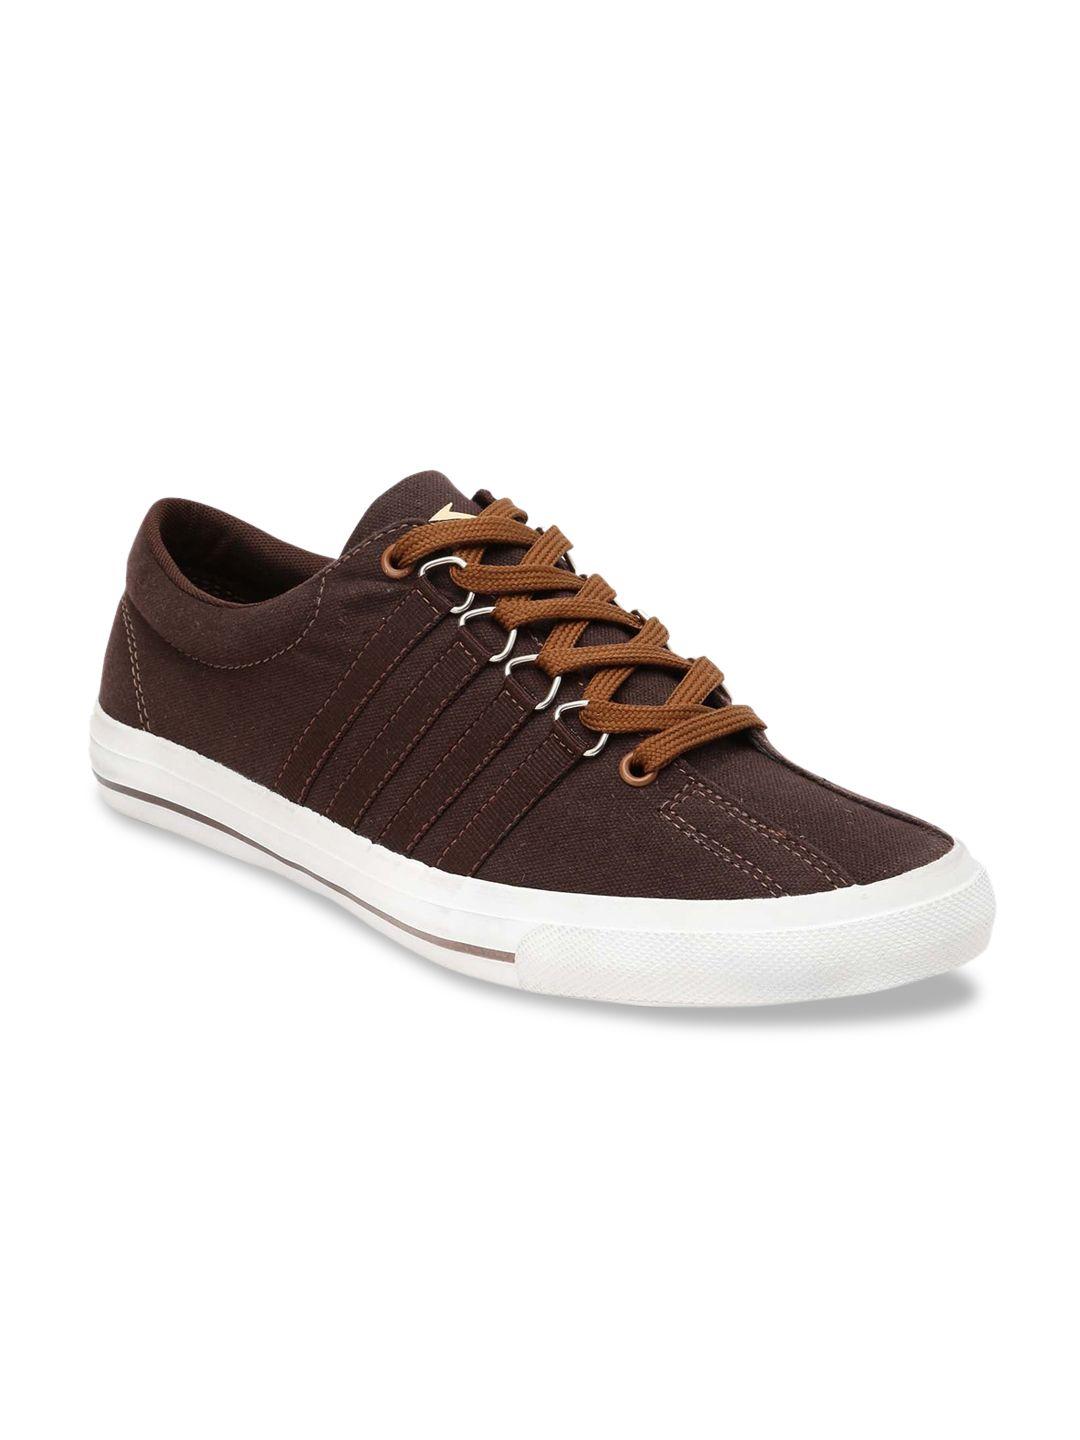 paragon-men-brown-&-whited-solid-regular-sneakers